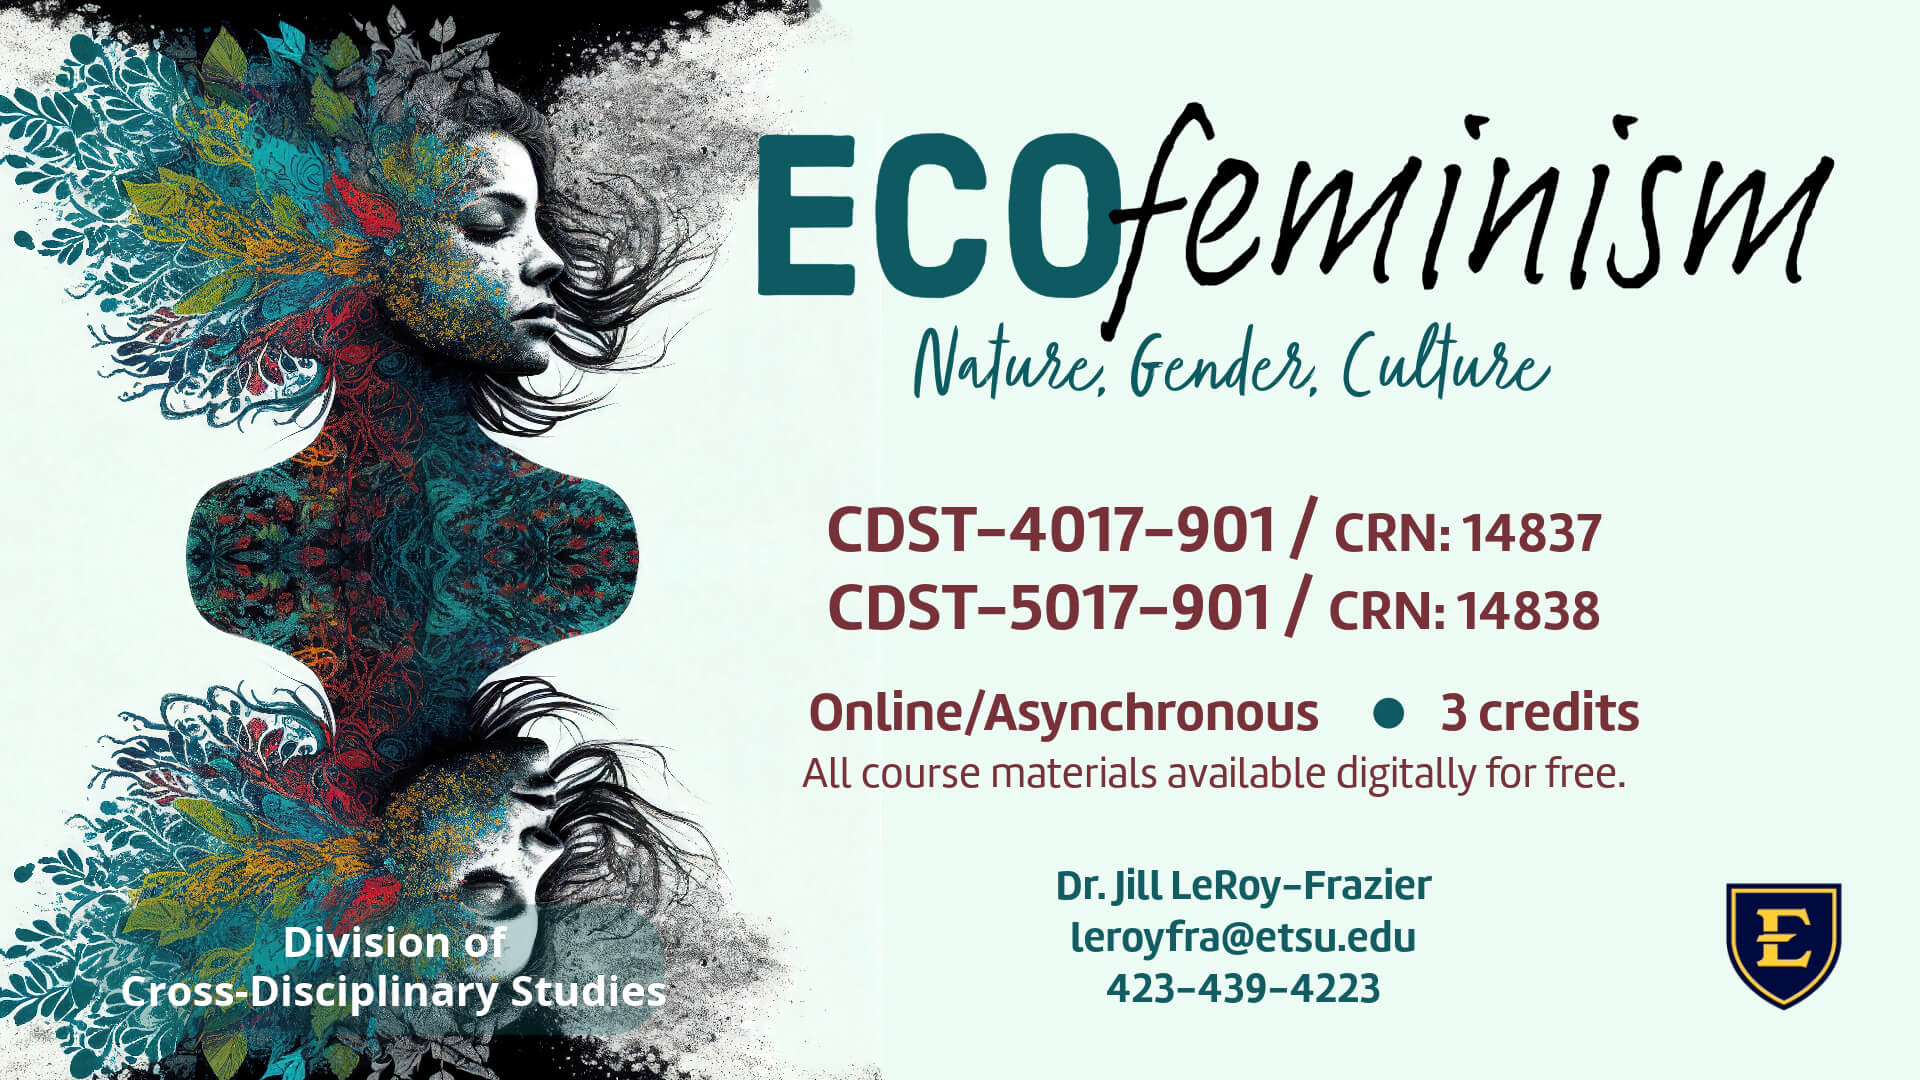 Ecofeminism: Nature, Gender, Culture